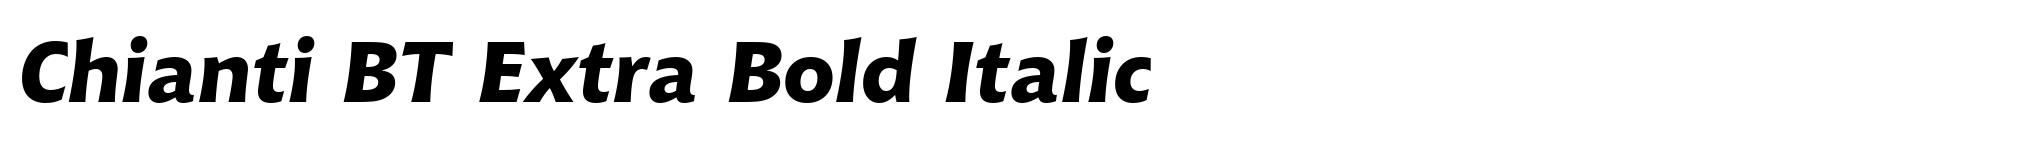 Chianti BT Extra Bold Italic image